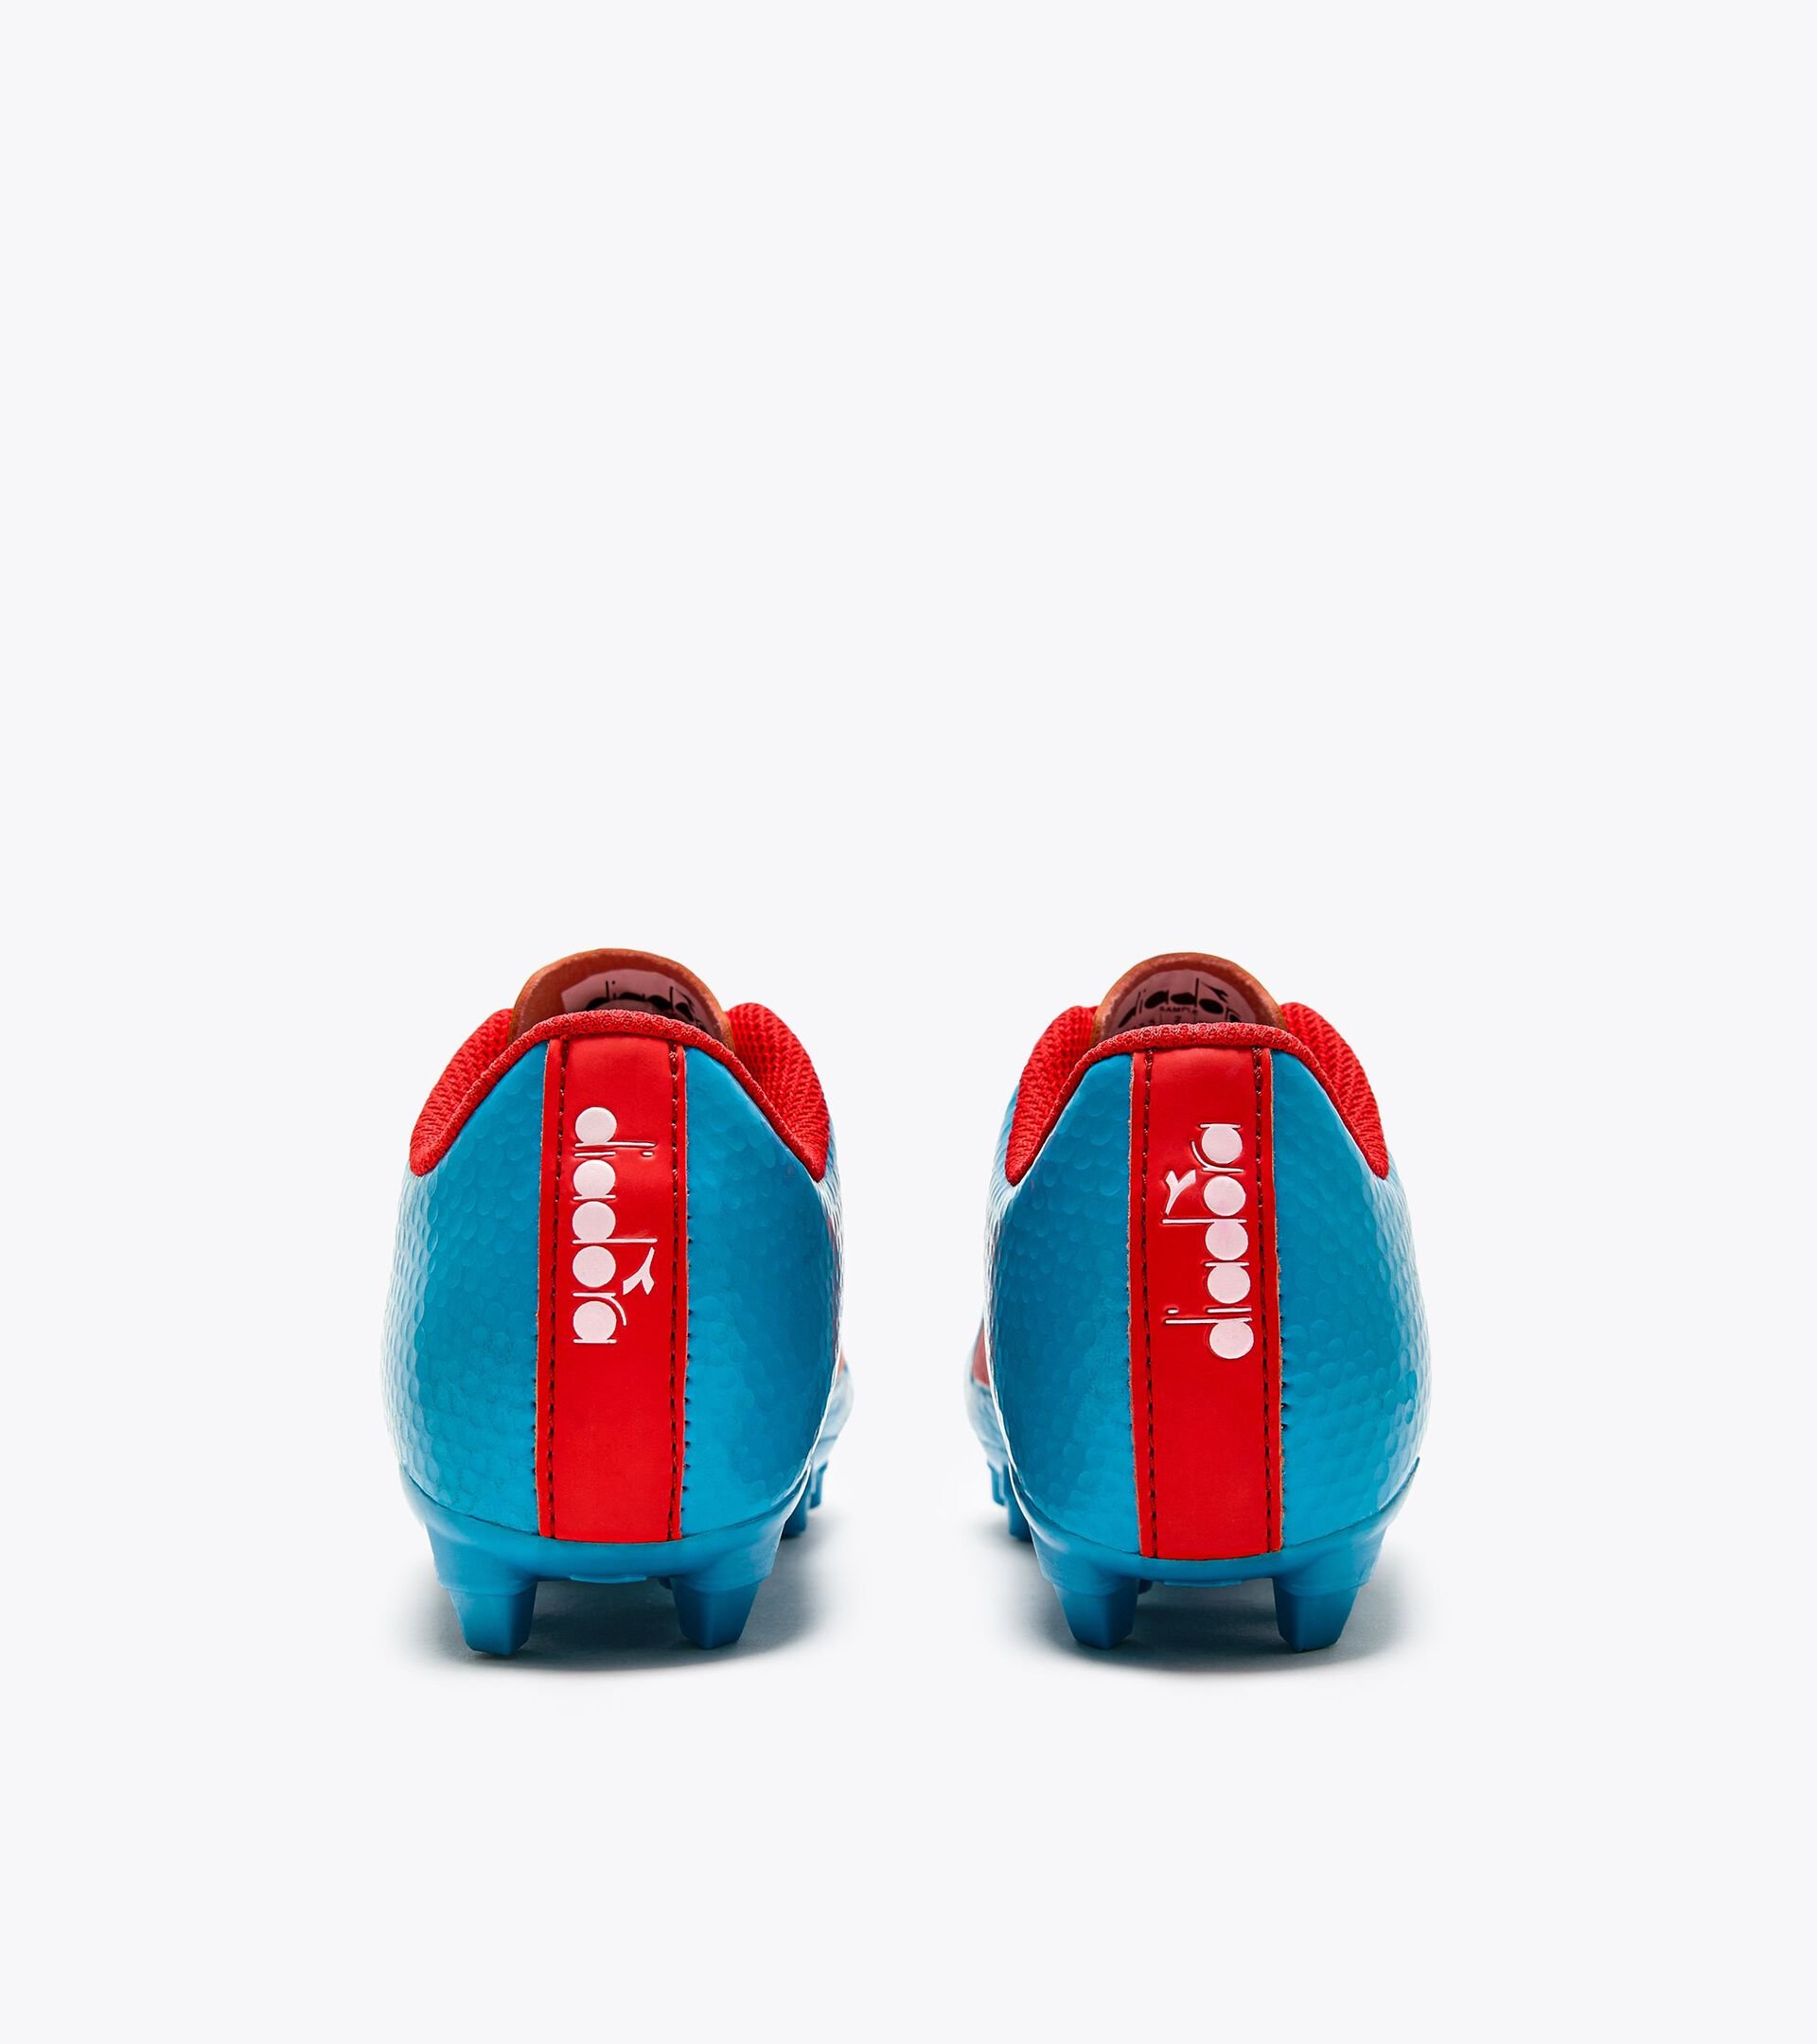 Calcio boots for firm grounds - Junior CATTURA GR LPU JR BLUE FLUO/FLUO RED X/WHT - Diadora